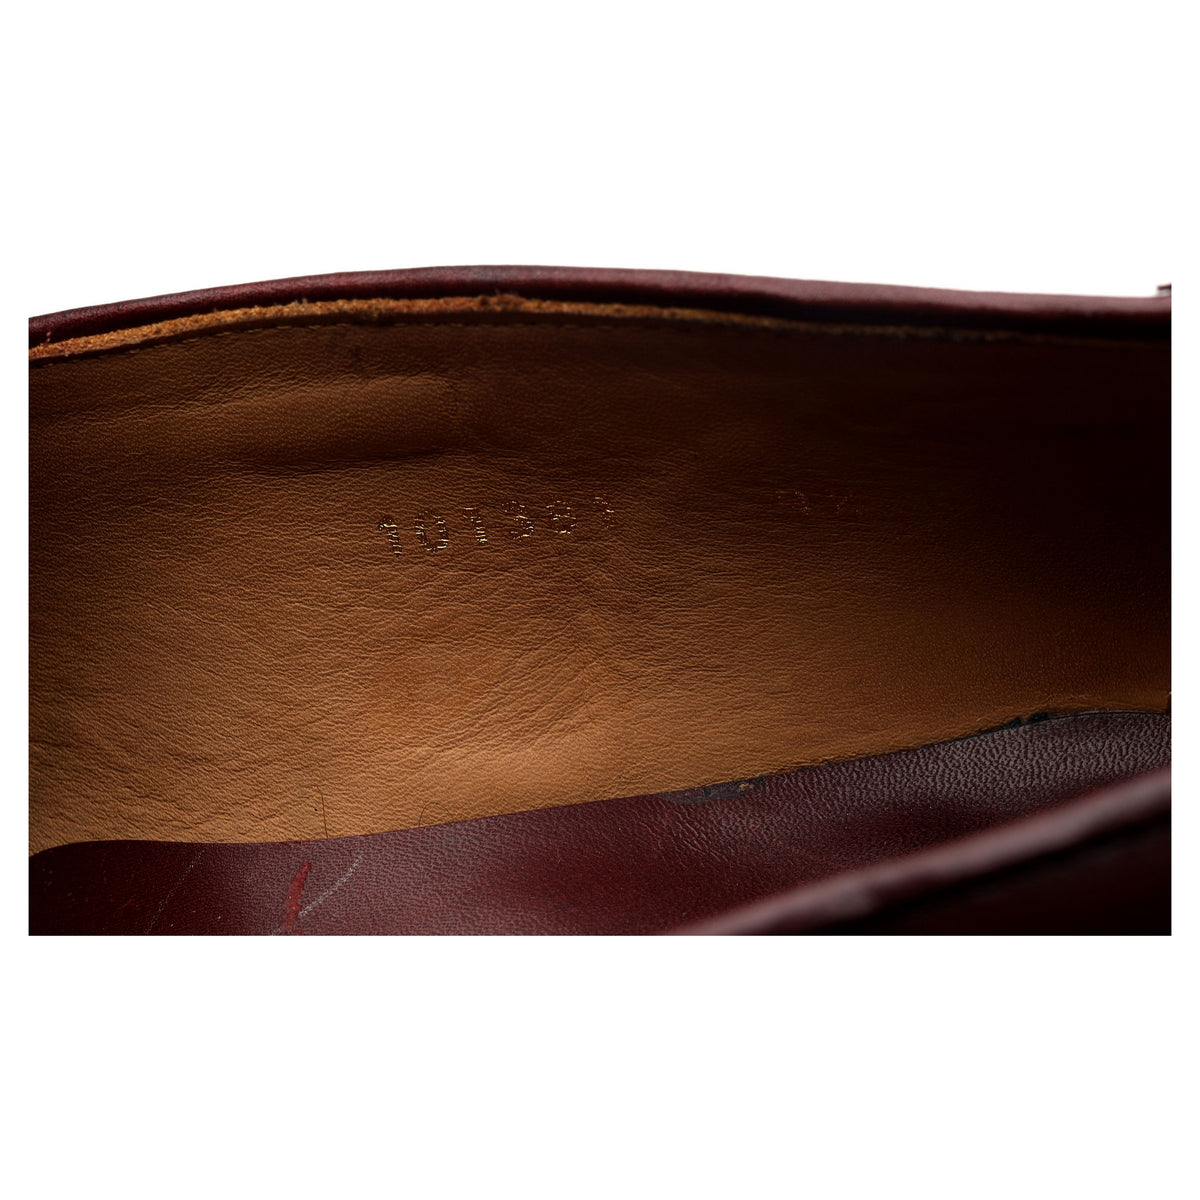 &#39;101381&#39; Burgundy Leather Tassel Loafers UK 9.5